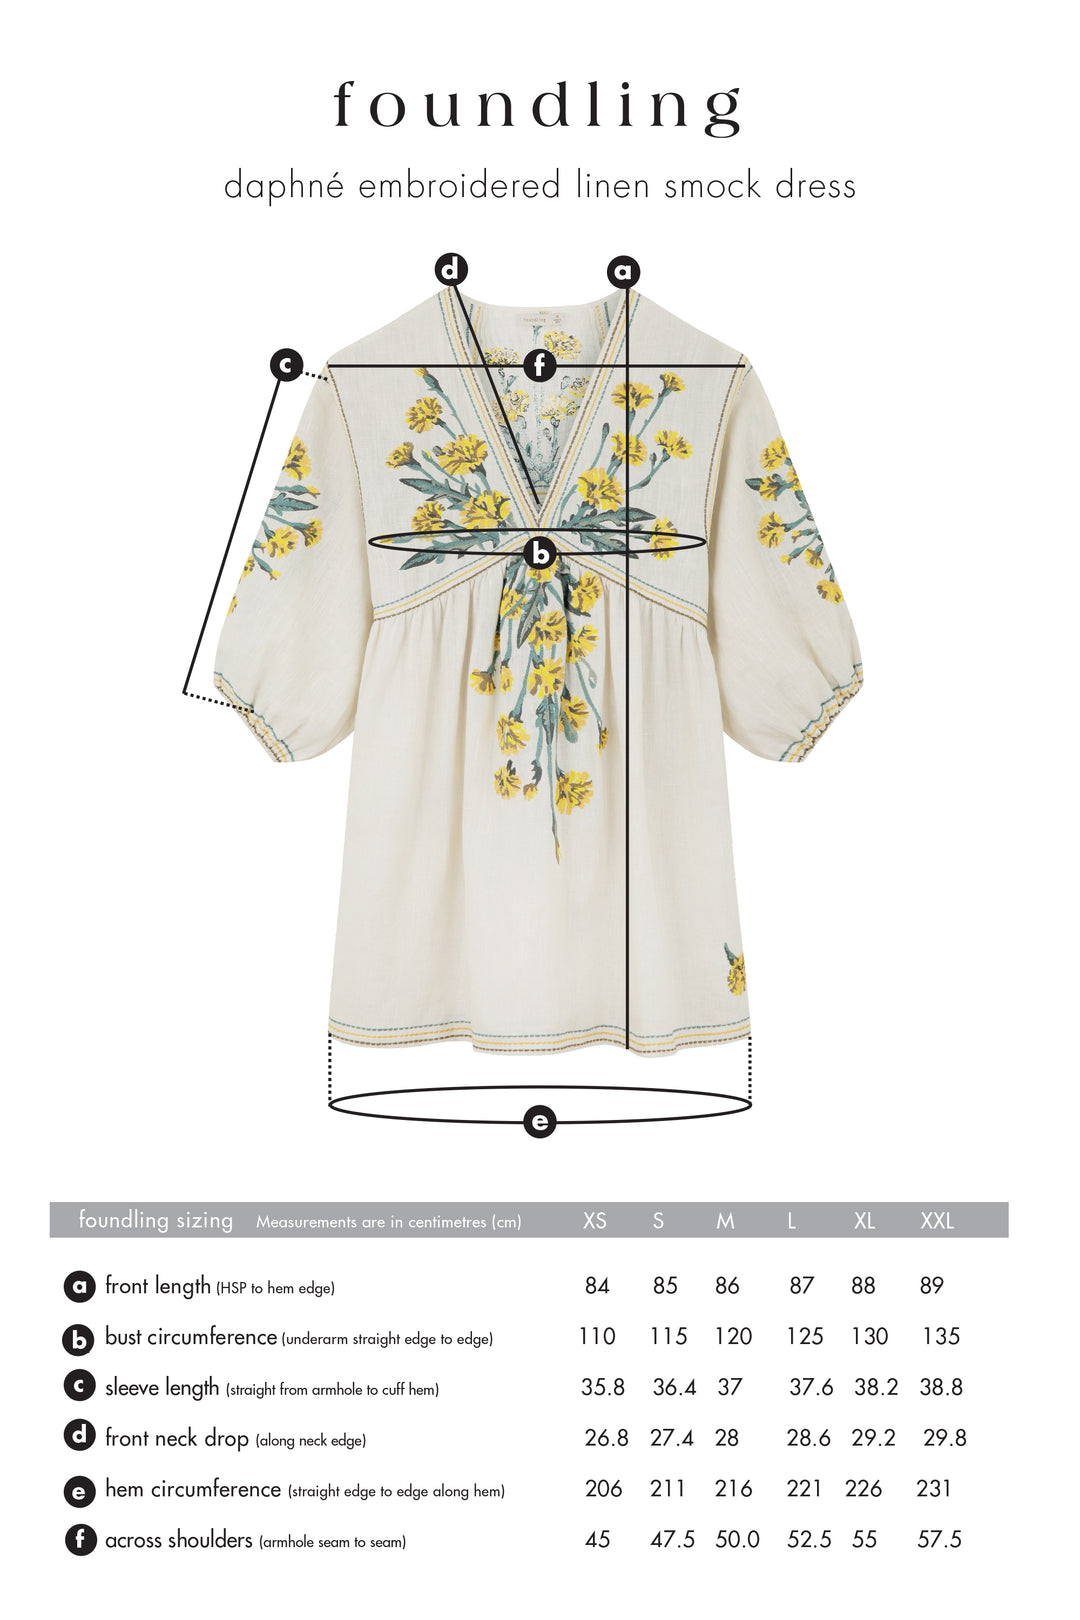 foundling linen embroidered daphne smock dress size guide